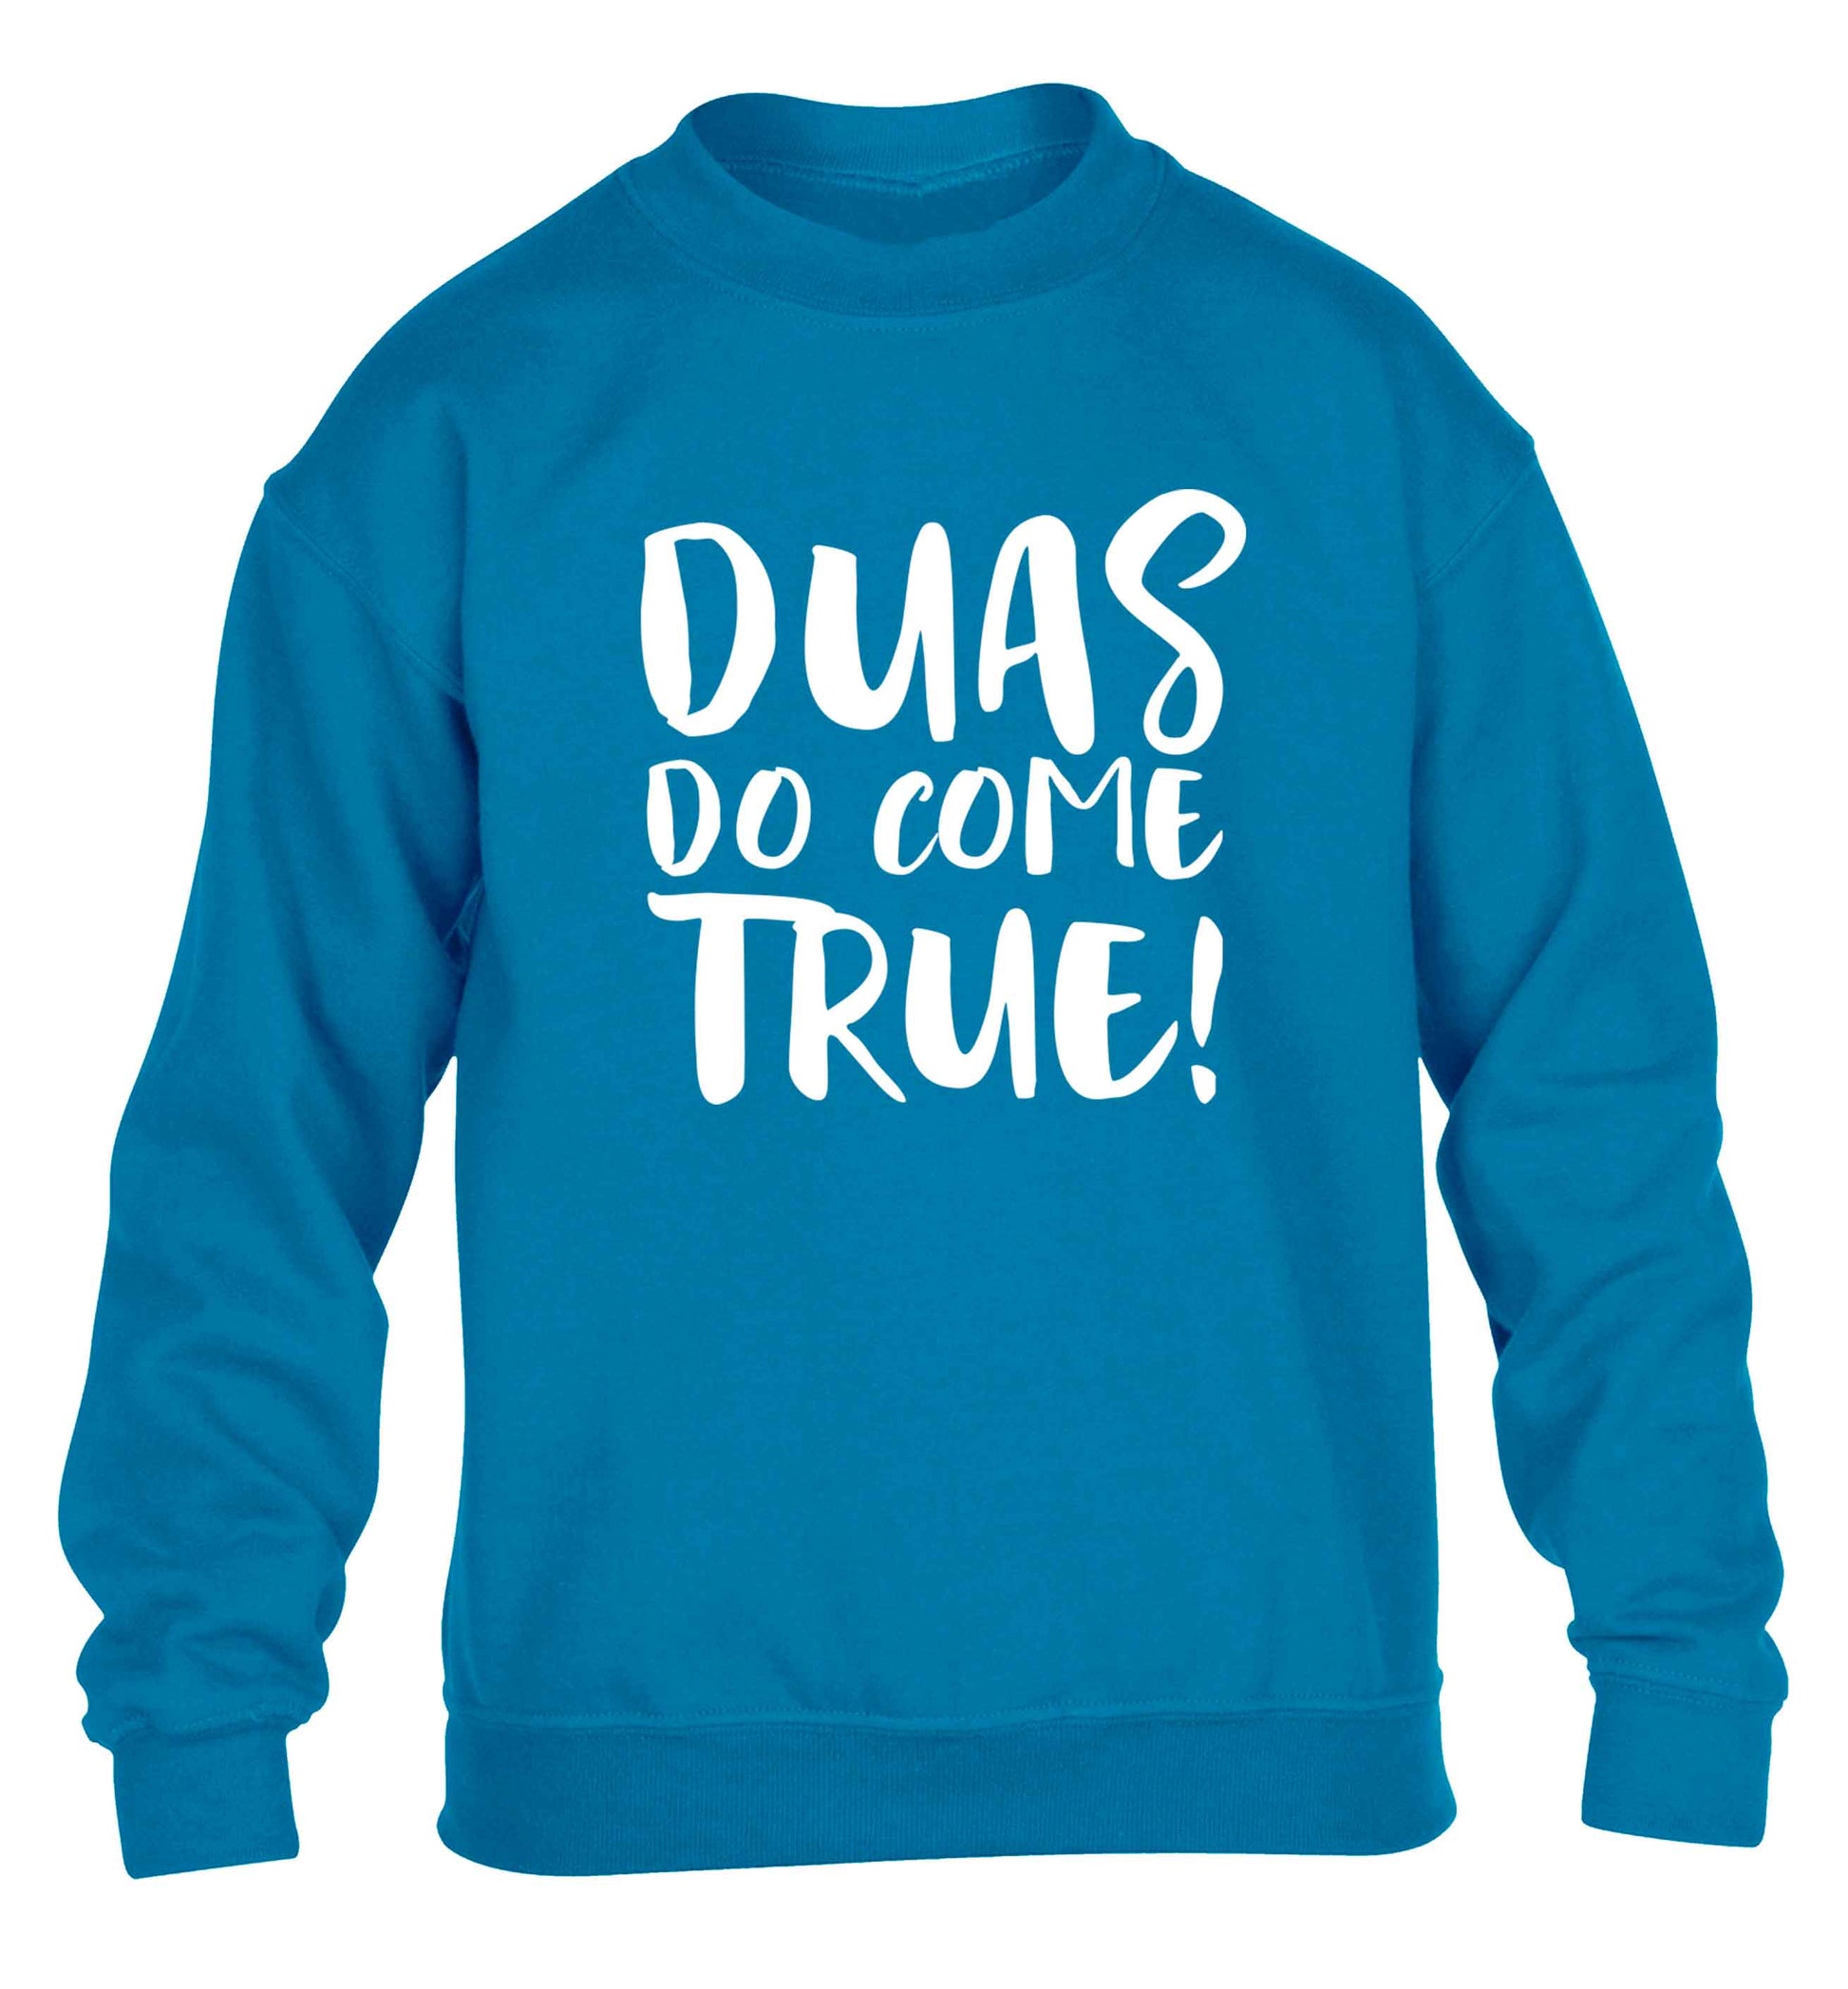 Duas do come true children's blue sweater 12-13 Years